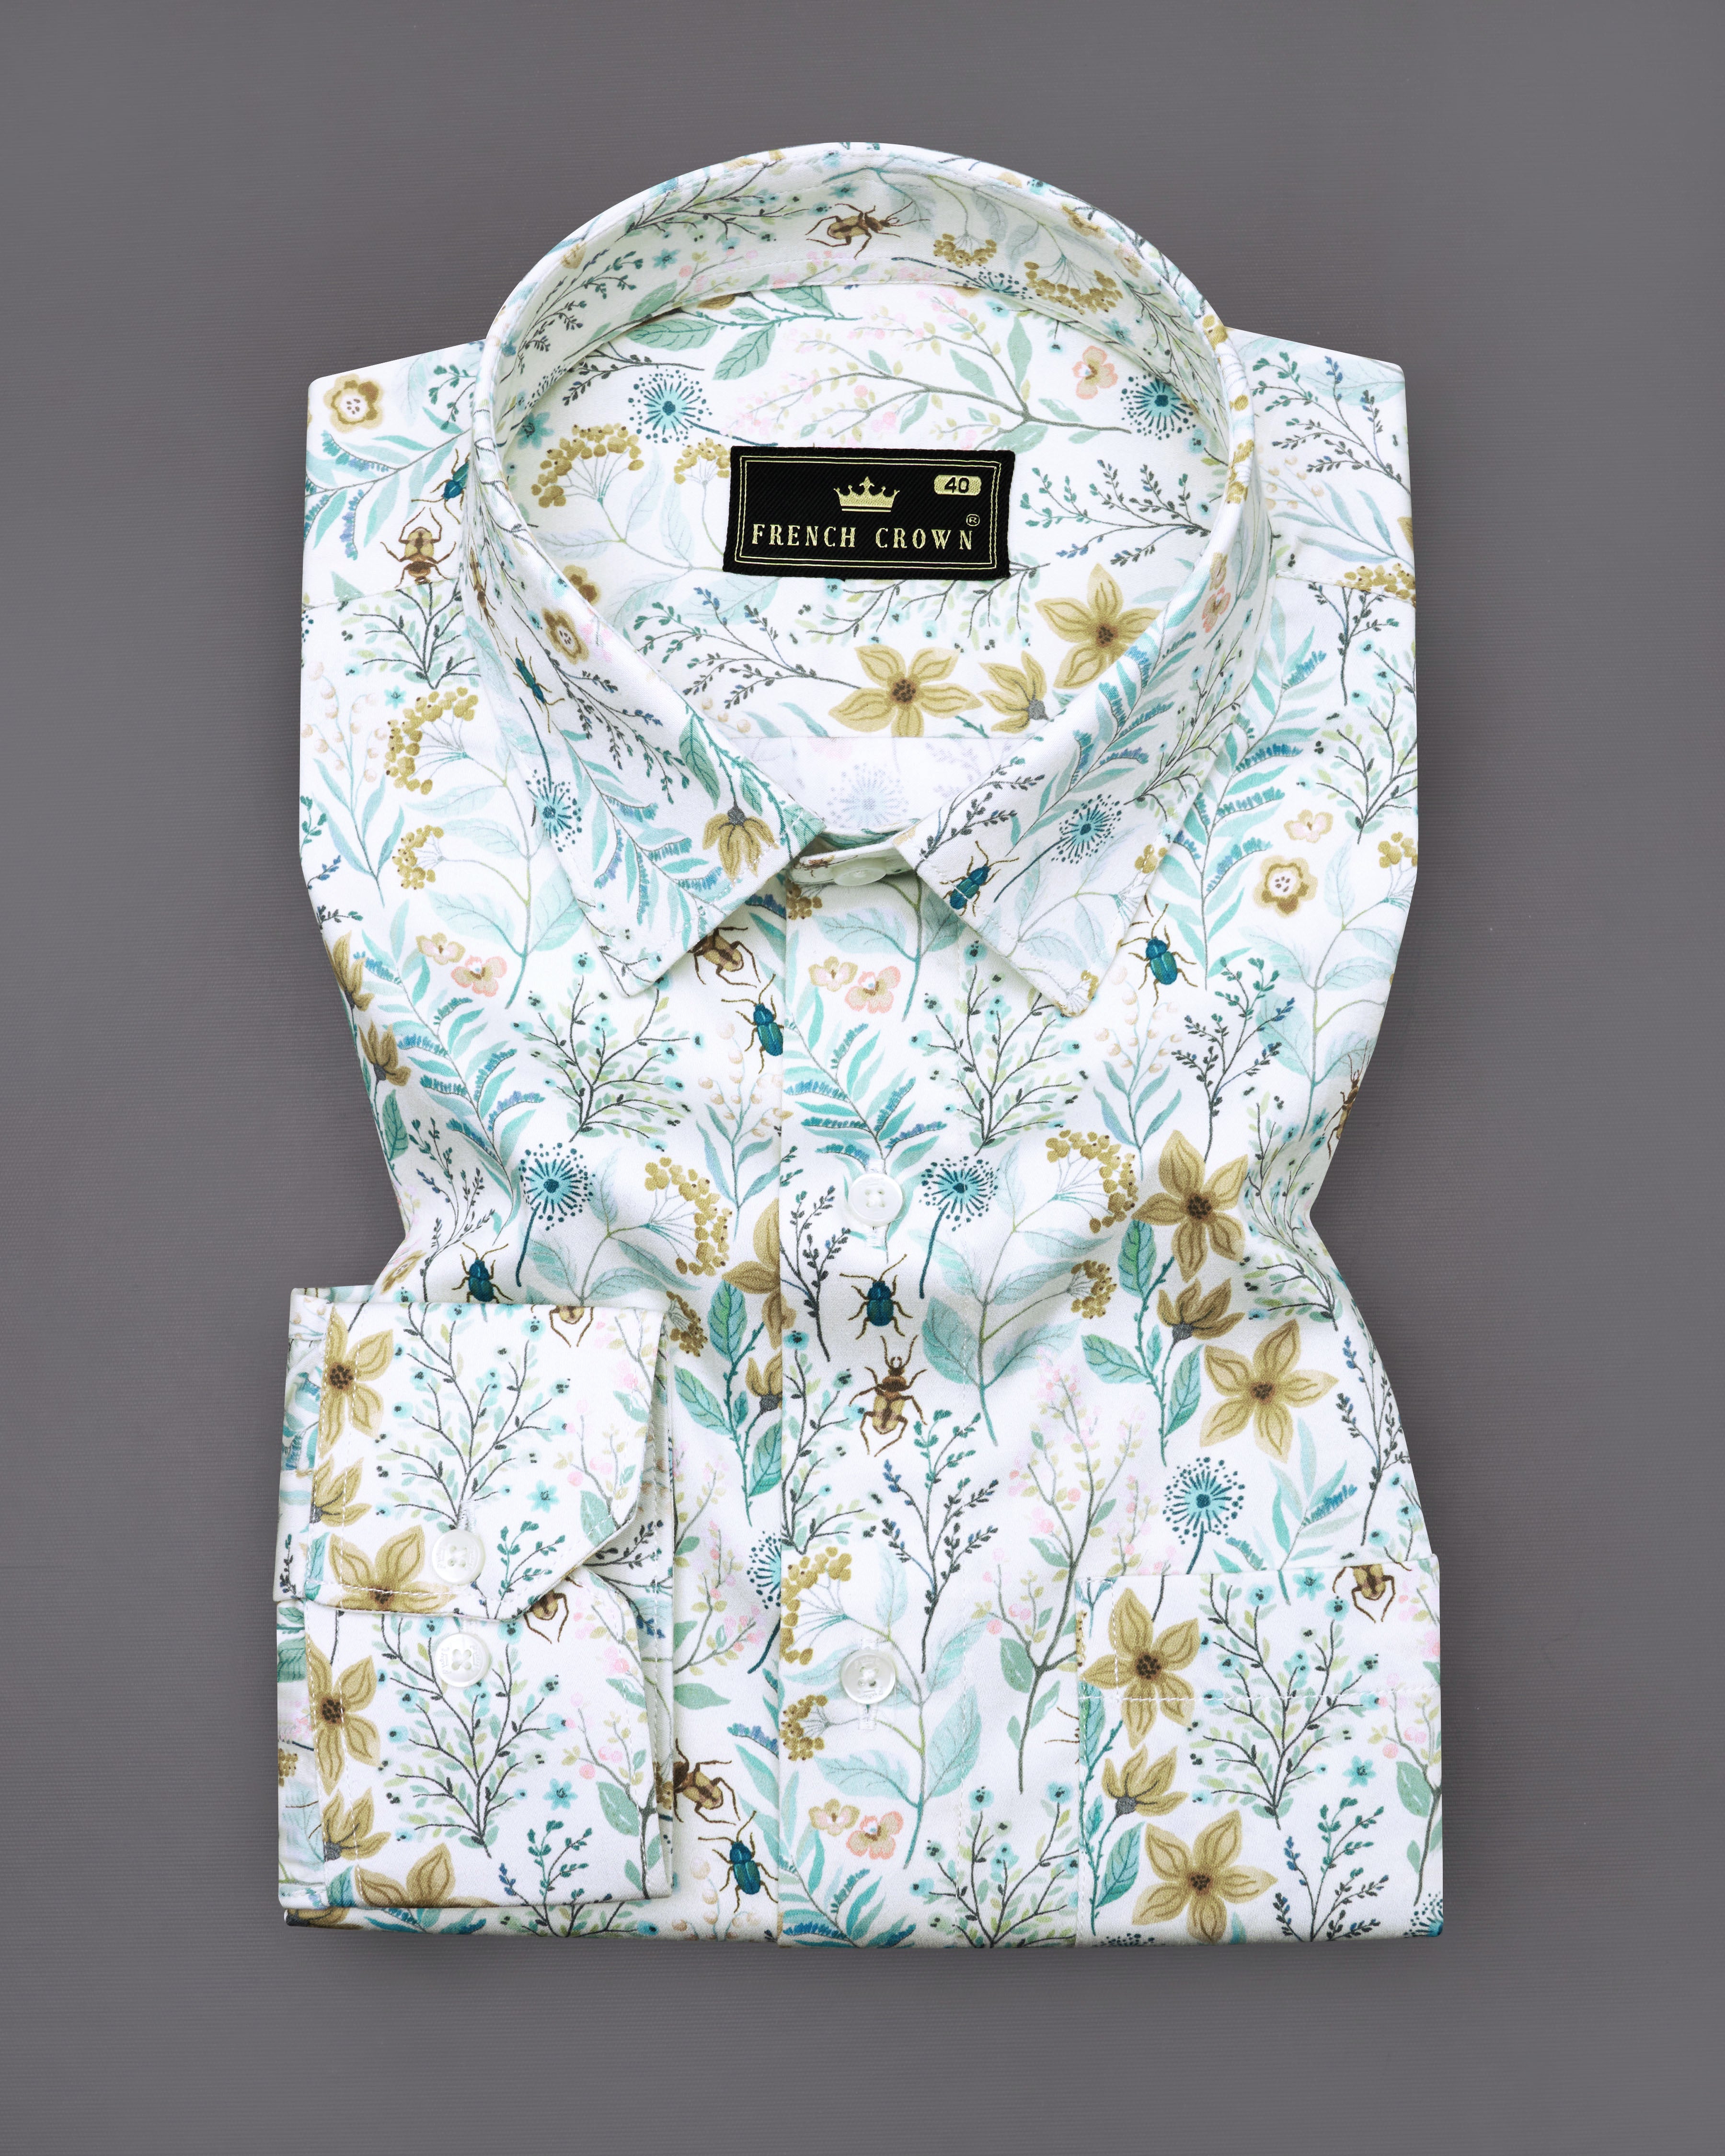 Bicanca Cream with Multicolor Floral Printed Super Soft Premium Cotton Shirt